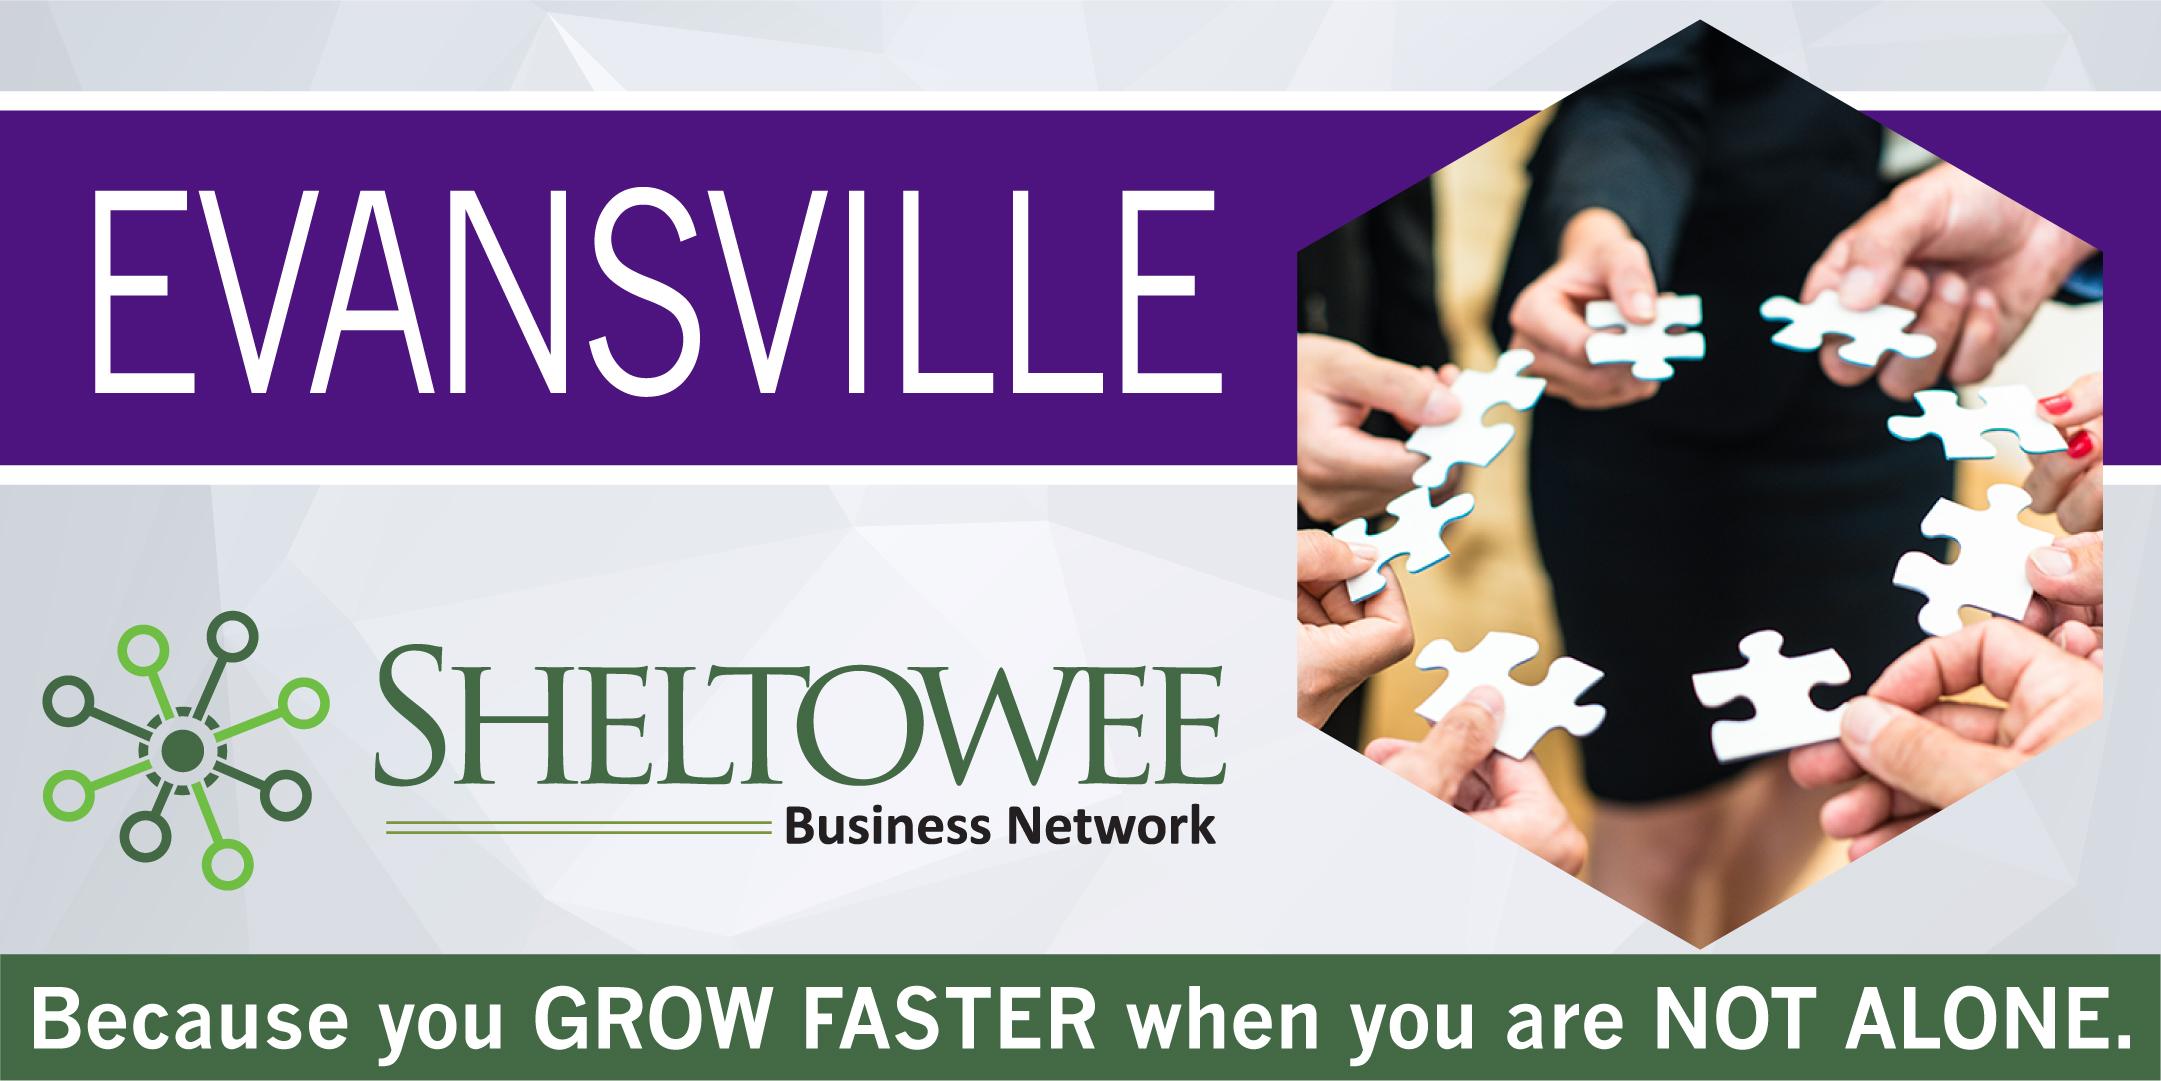 Evansville Sheltowee Business Network Node Meeting